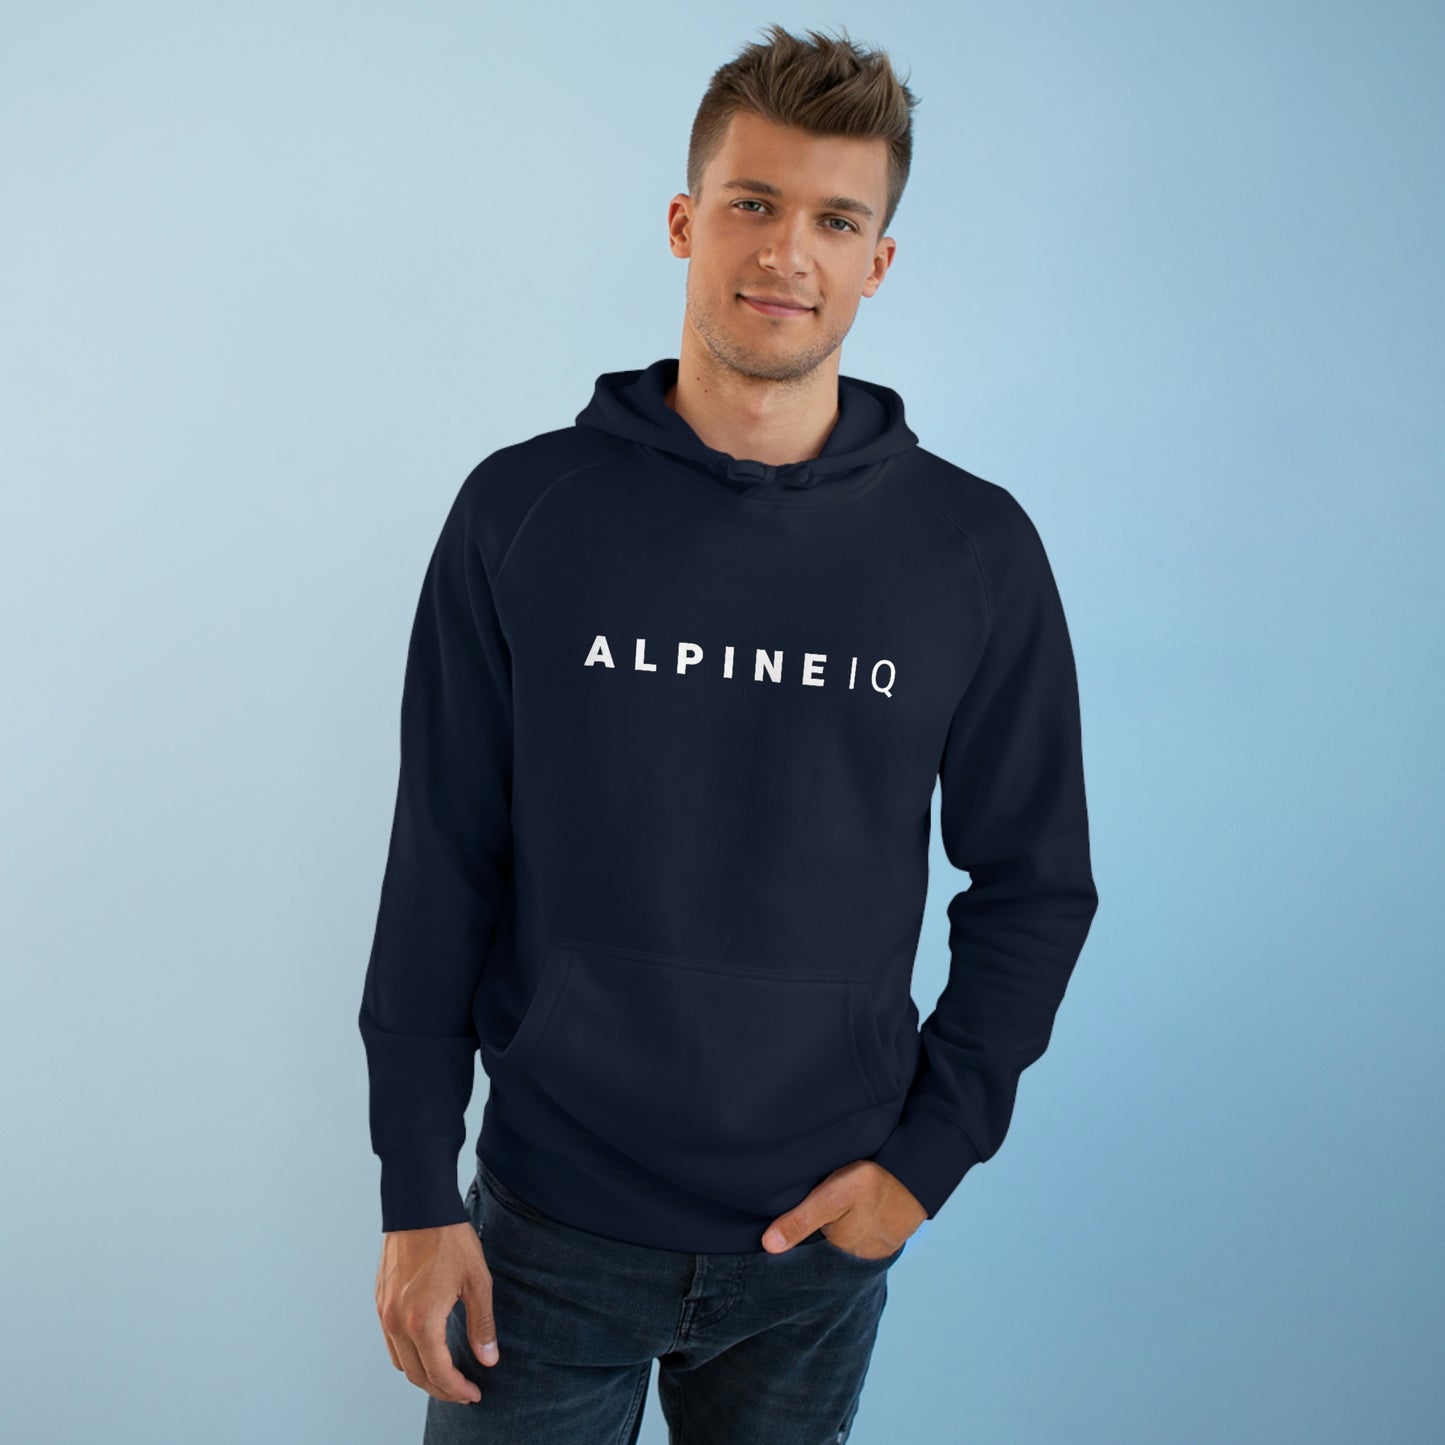 Alpine IQ Hoodie